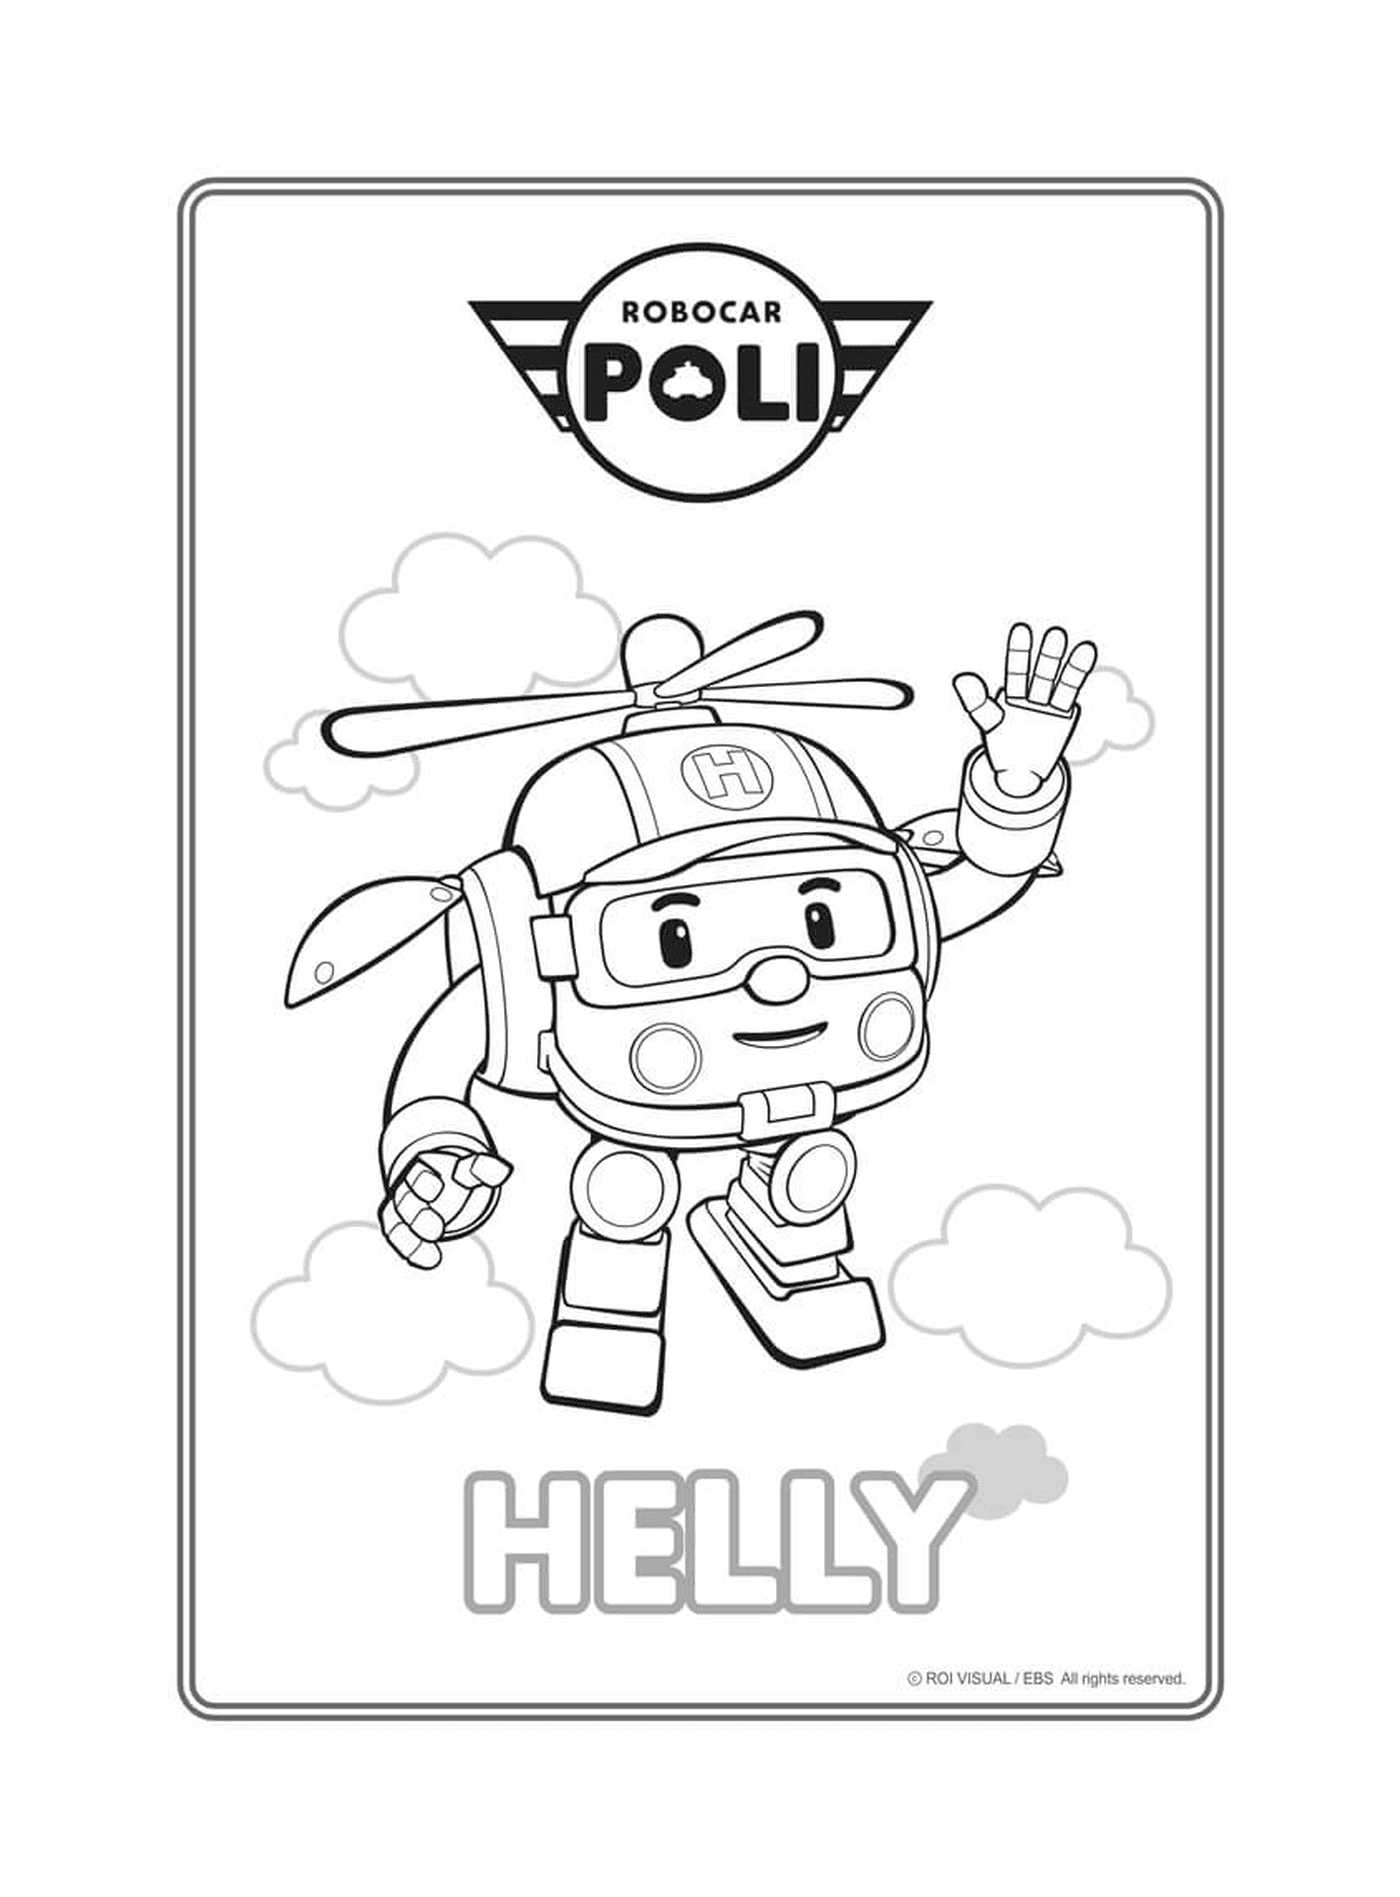   Helly, l'hélicoptère de Robocar Poli 